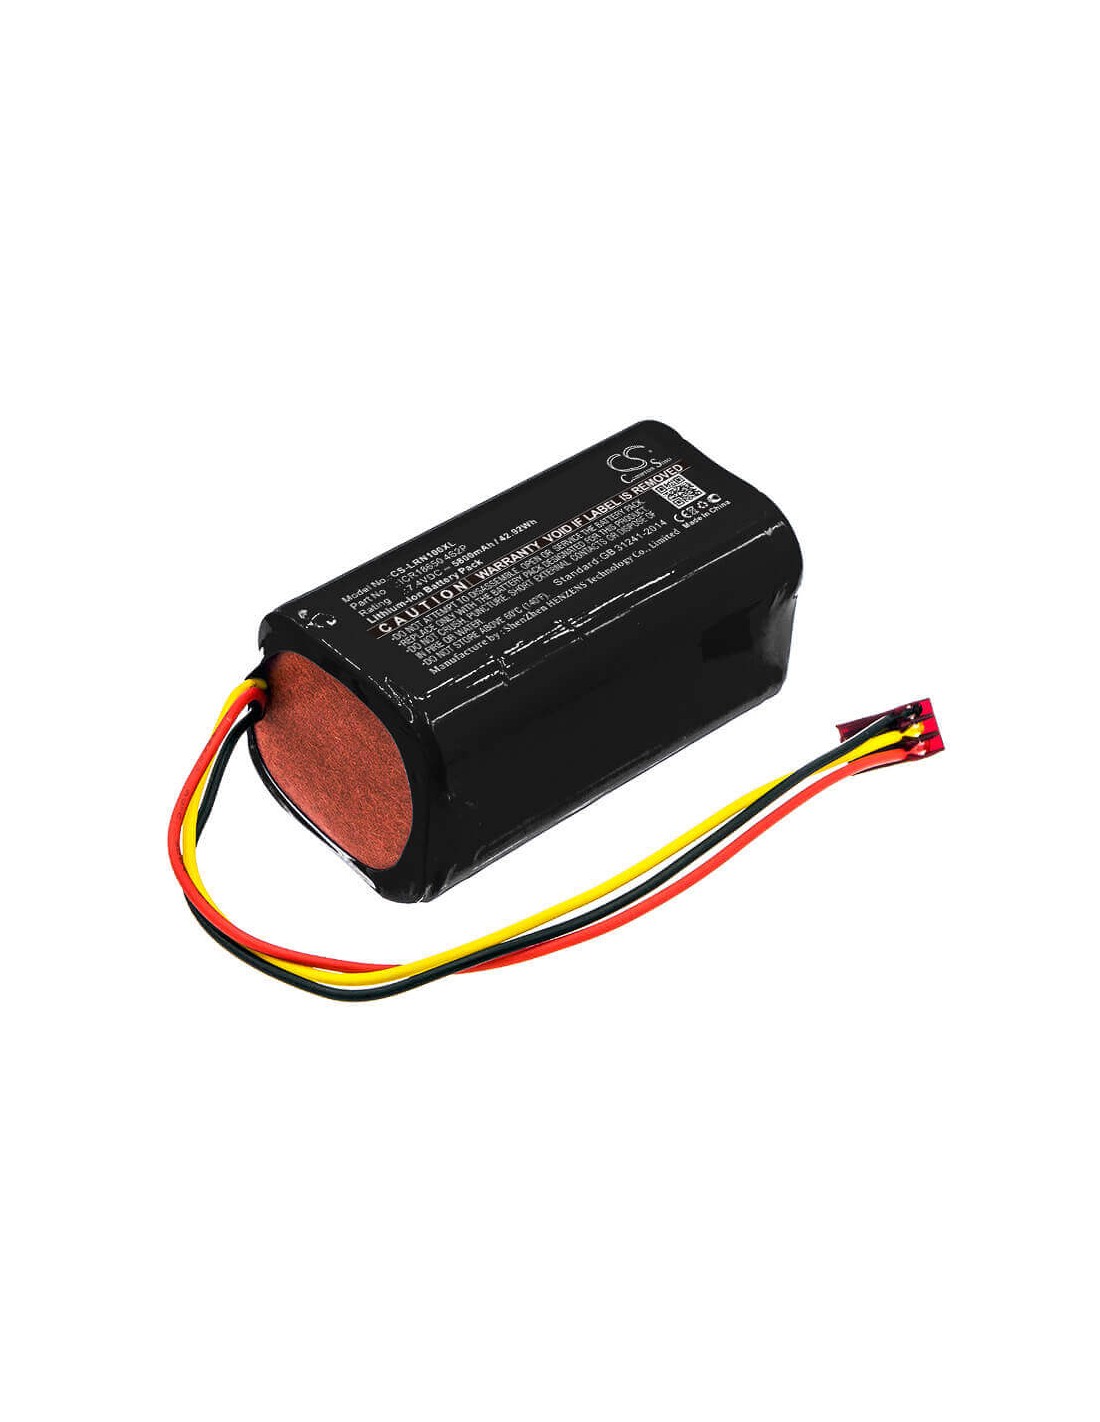 Battery for Lazer Runner, Compatible 6800 Mah 4 Cell Li-ion Battery Pack 7.4V, 5800mAh - 42.92Wh